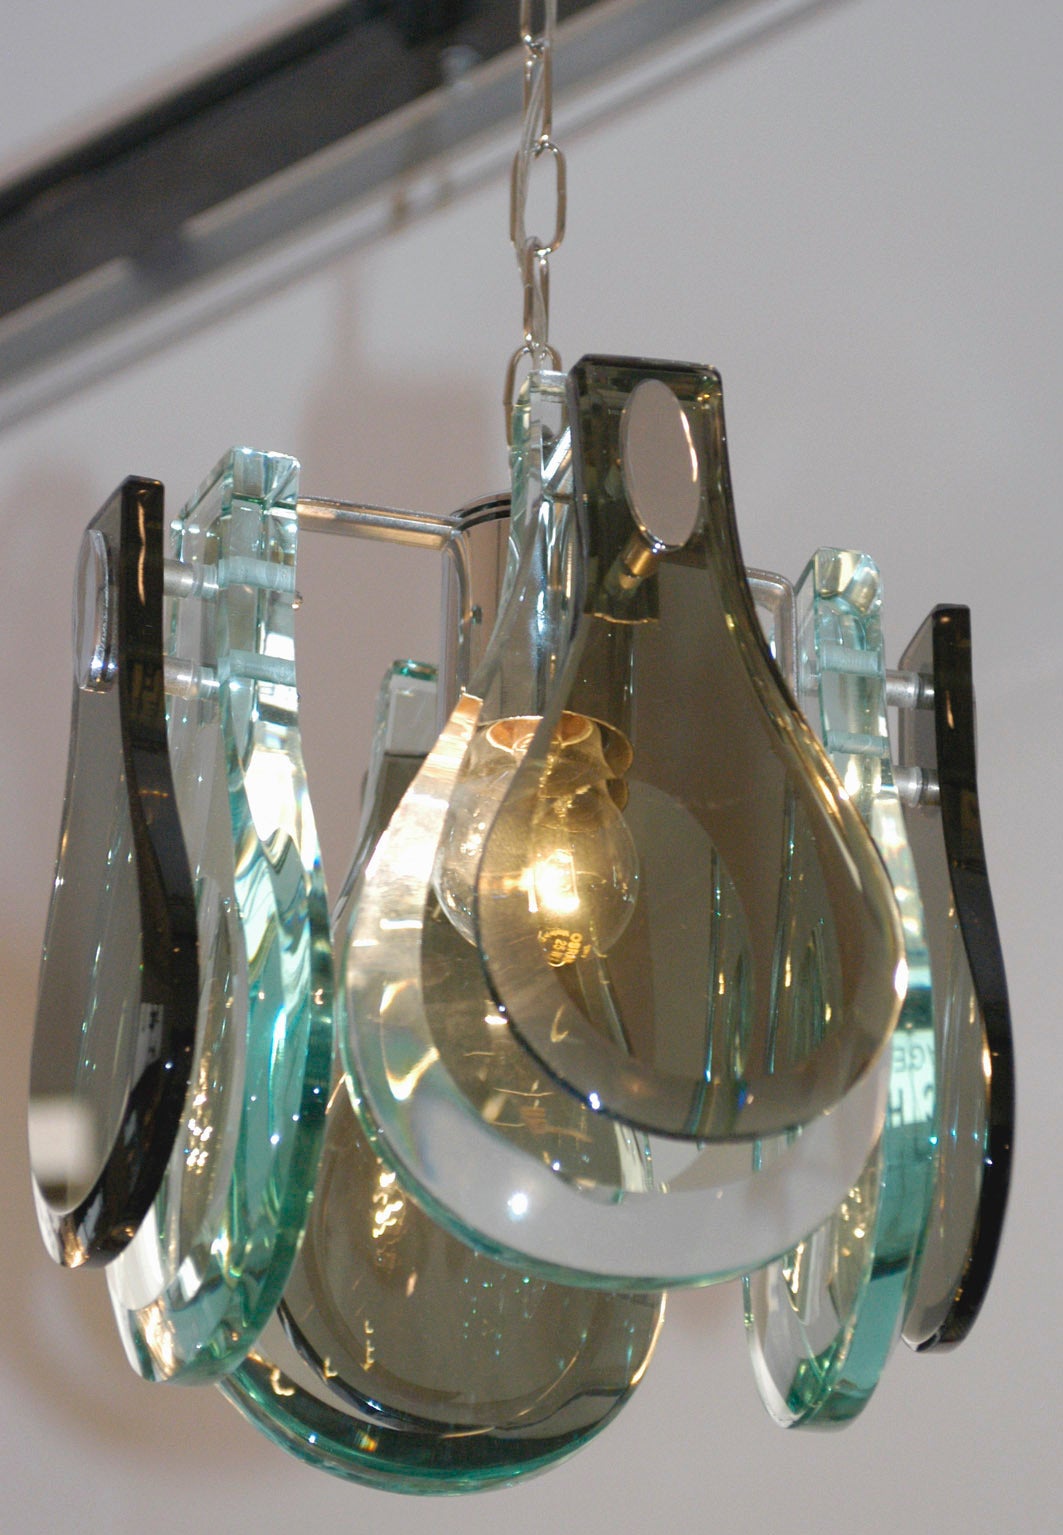 Italian Midcentury Glass Pendant Lamp in the Style of Fontana Arte 1